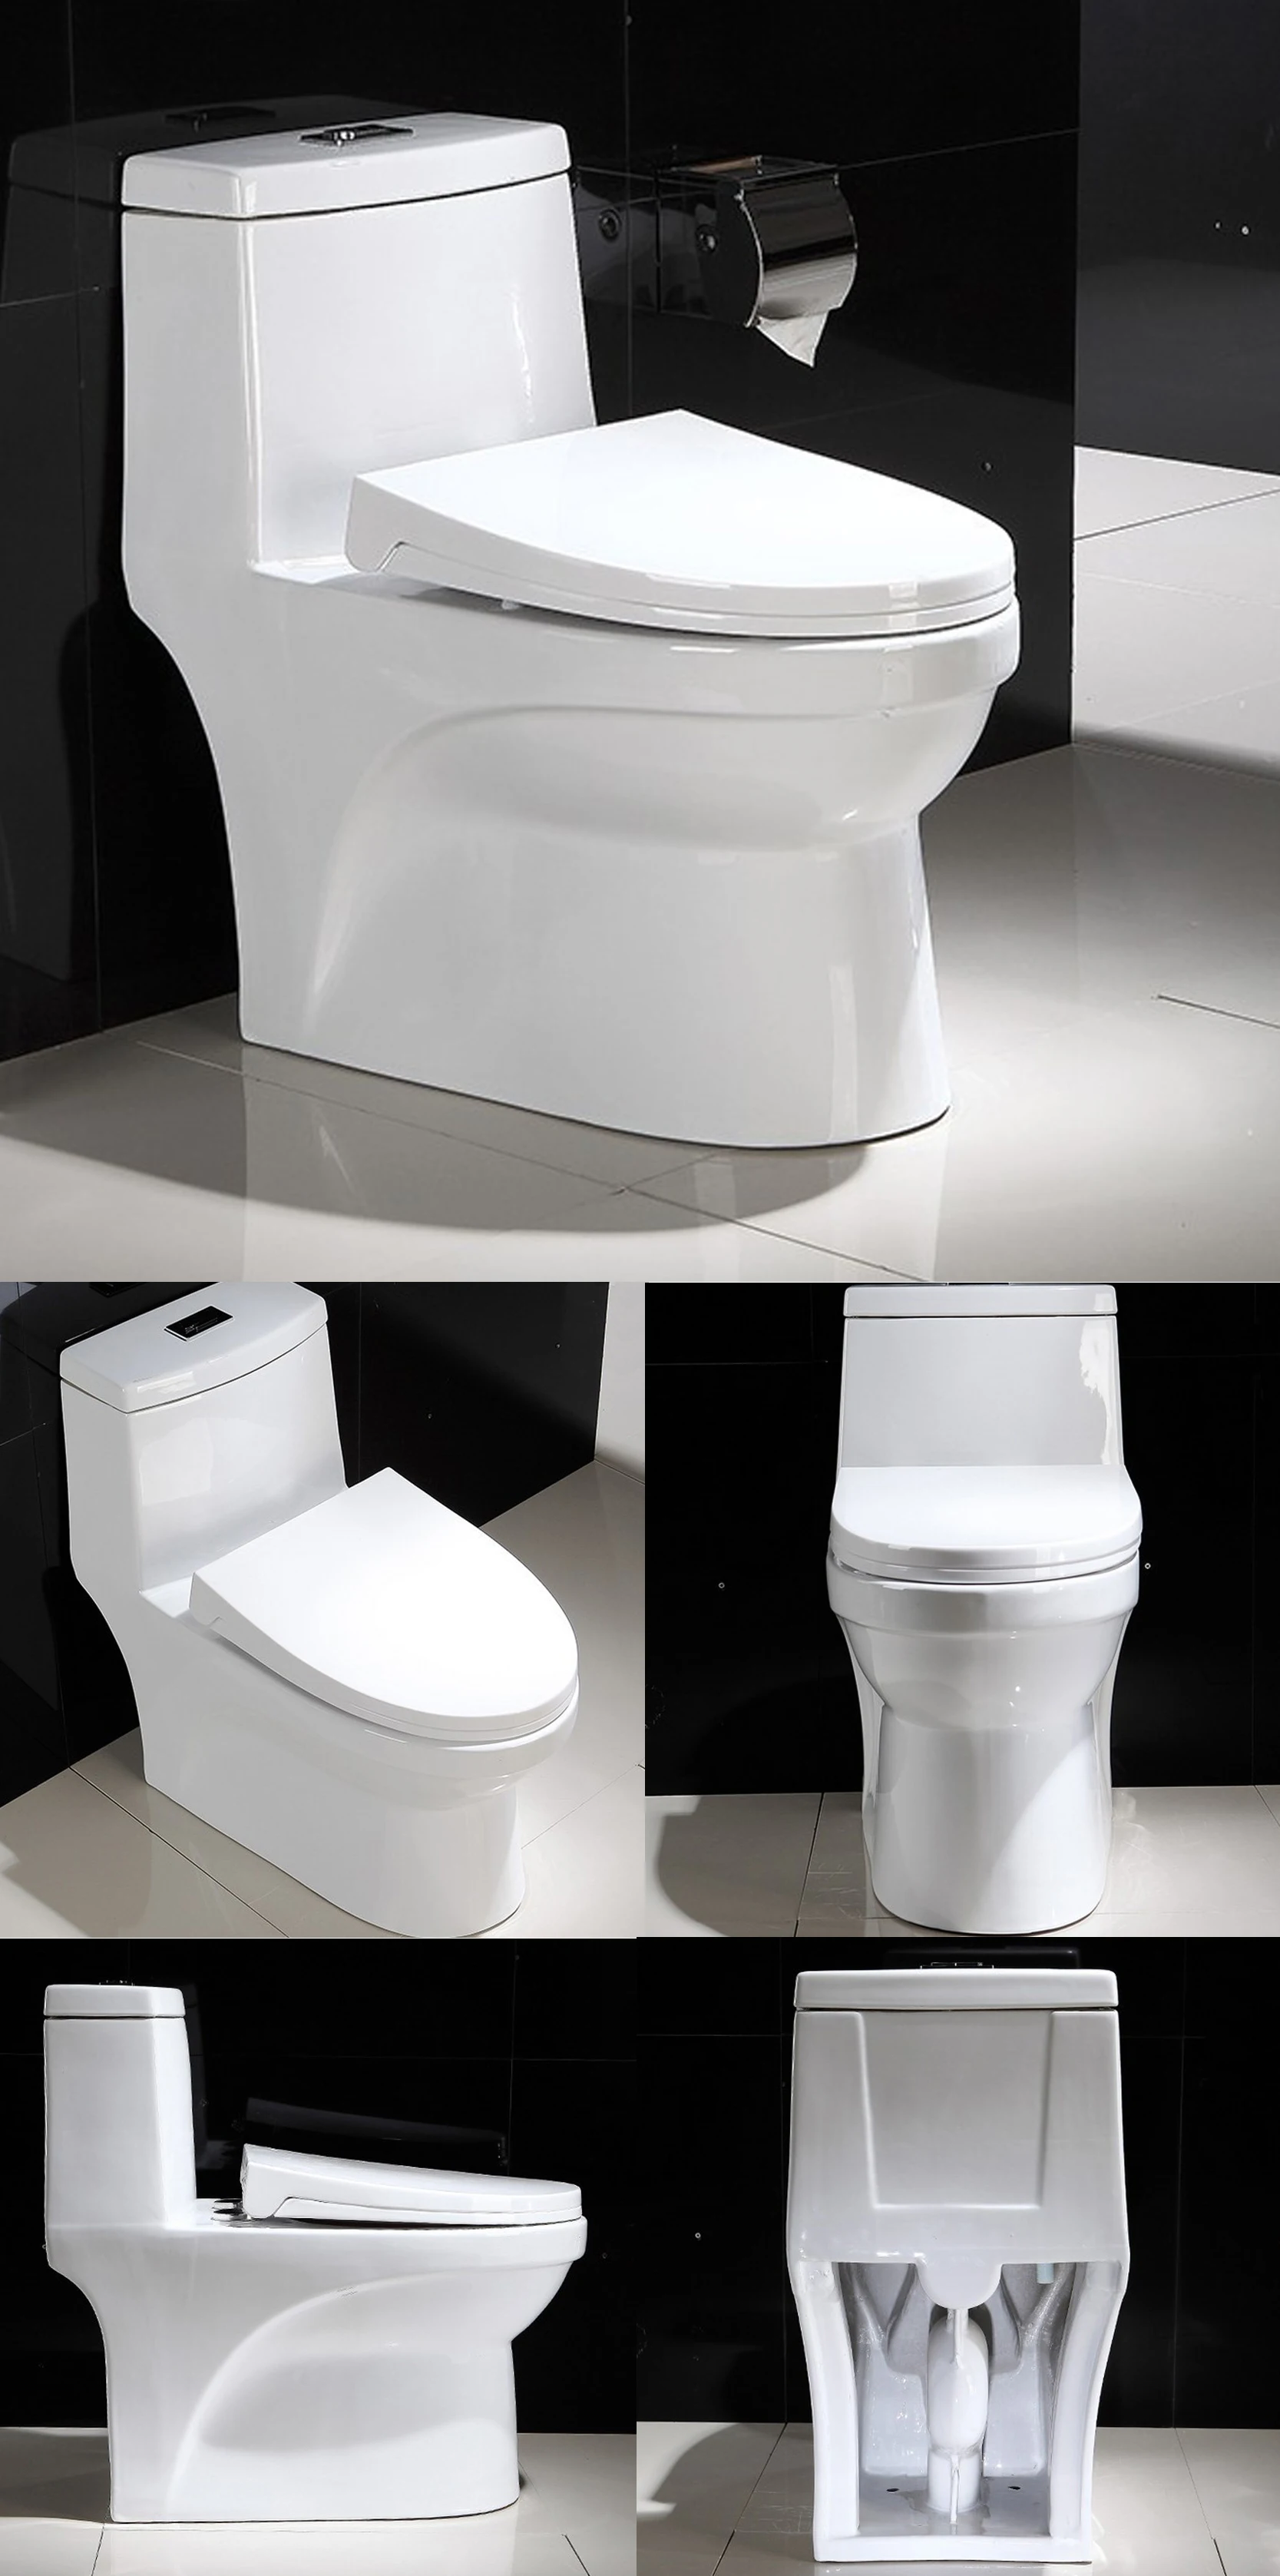 1308 Cheap Sanitary Ware One Piece Bathroom Ceramic Toilet Wc Sizes